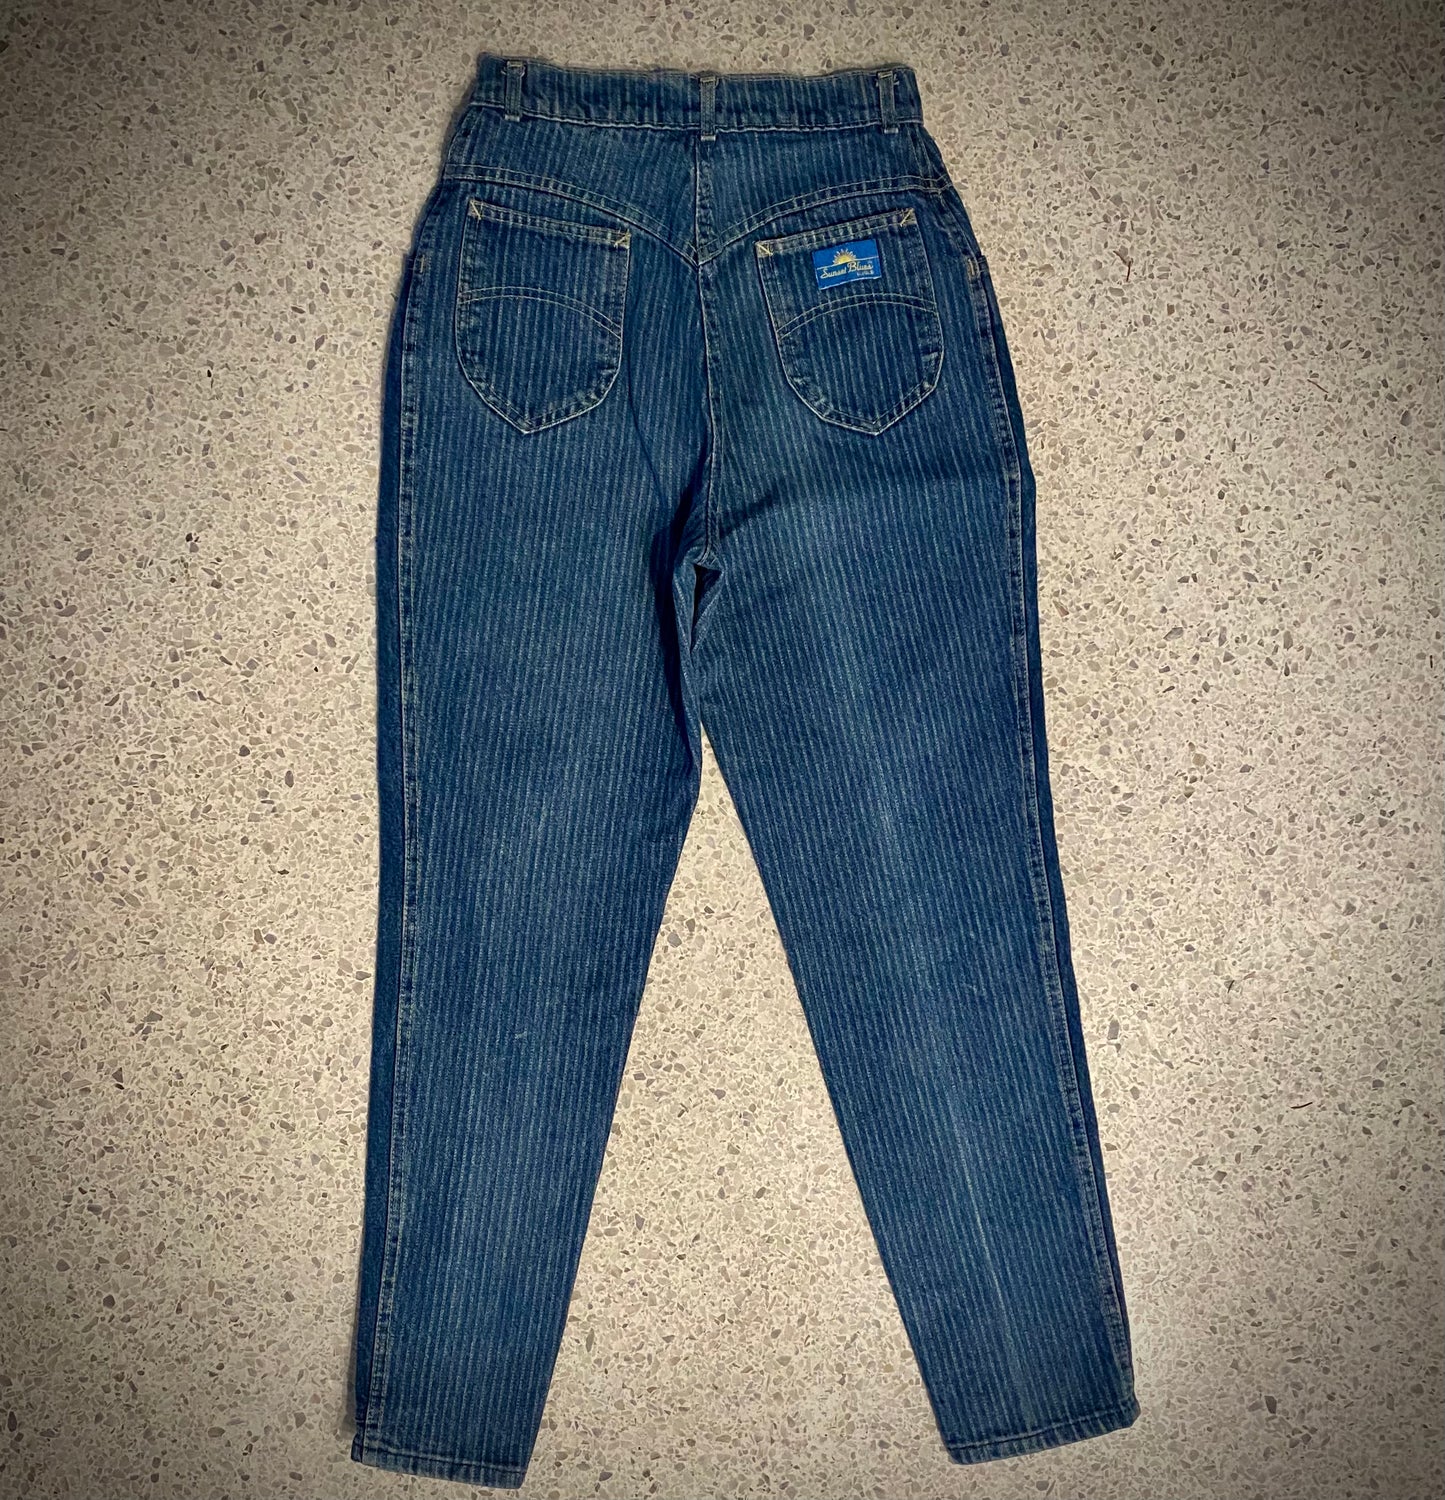 1980s Chic, Sunset Blues Denim Jeans